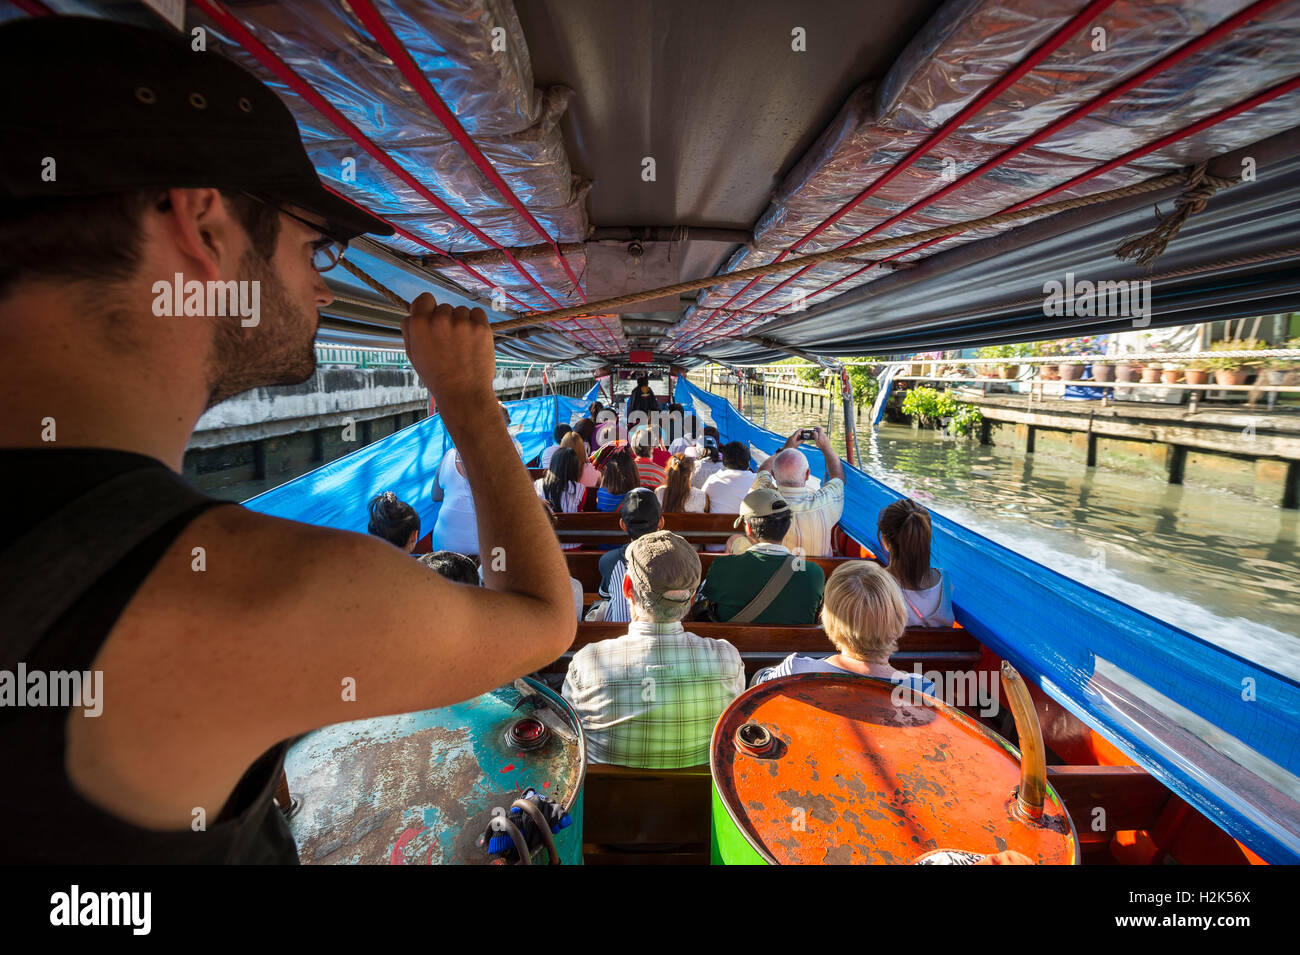 BANGKOK - NOVEMBER 17, 2014: Passengers ride a traditional khlong boat along one of the city's many canals. Stock Photo